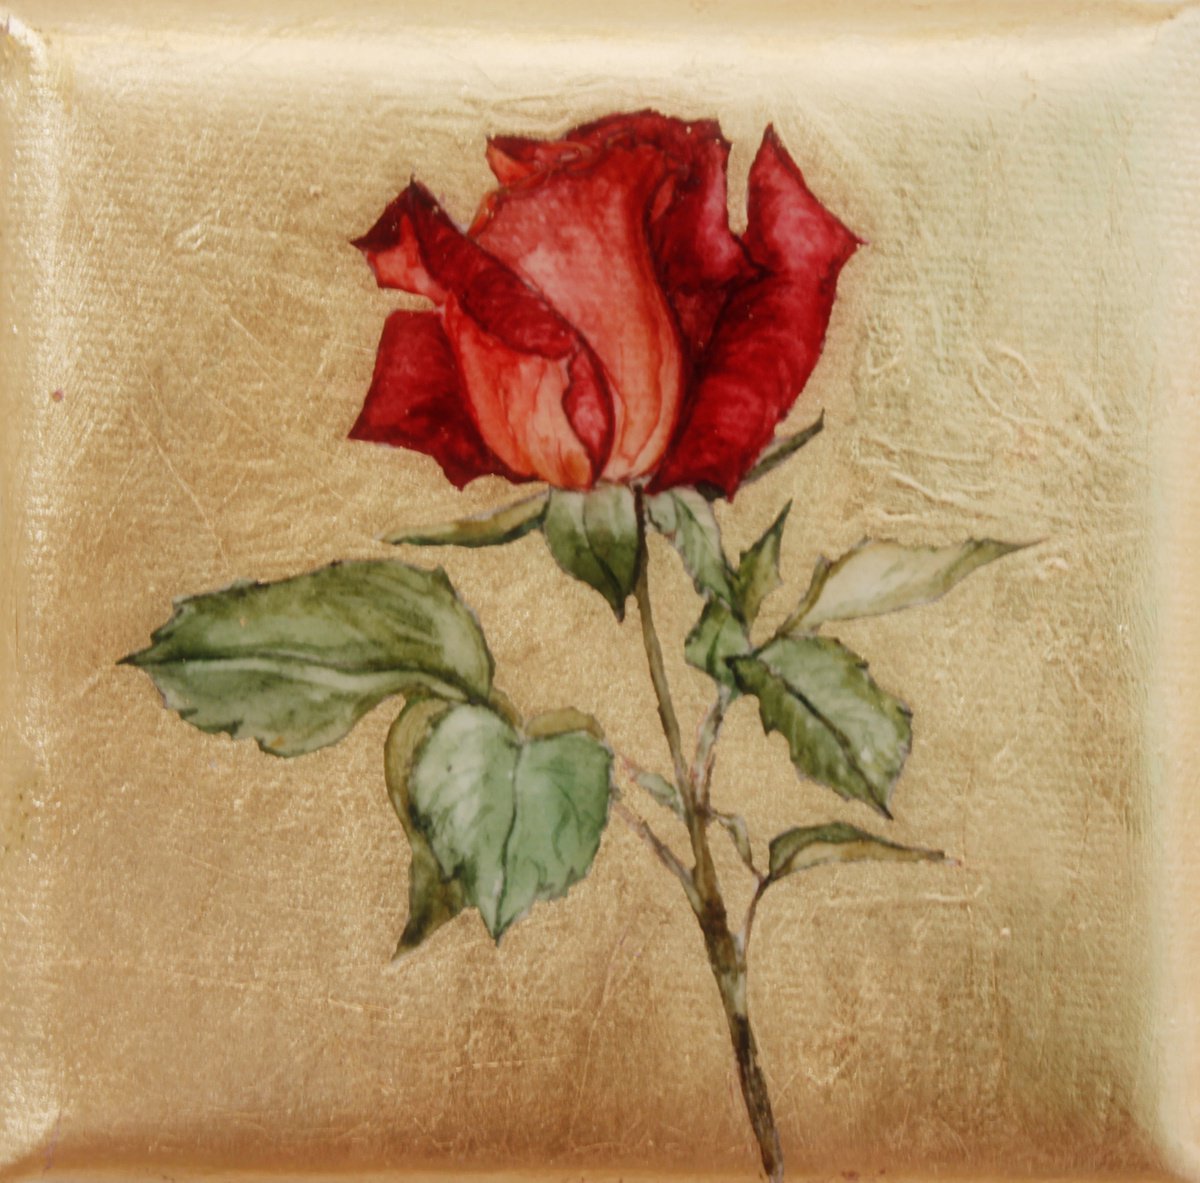 You Send Me a Rose by Aurora Kanti